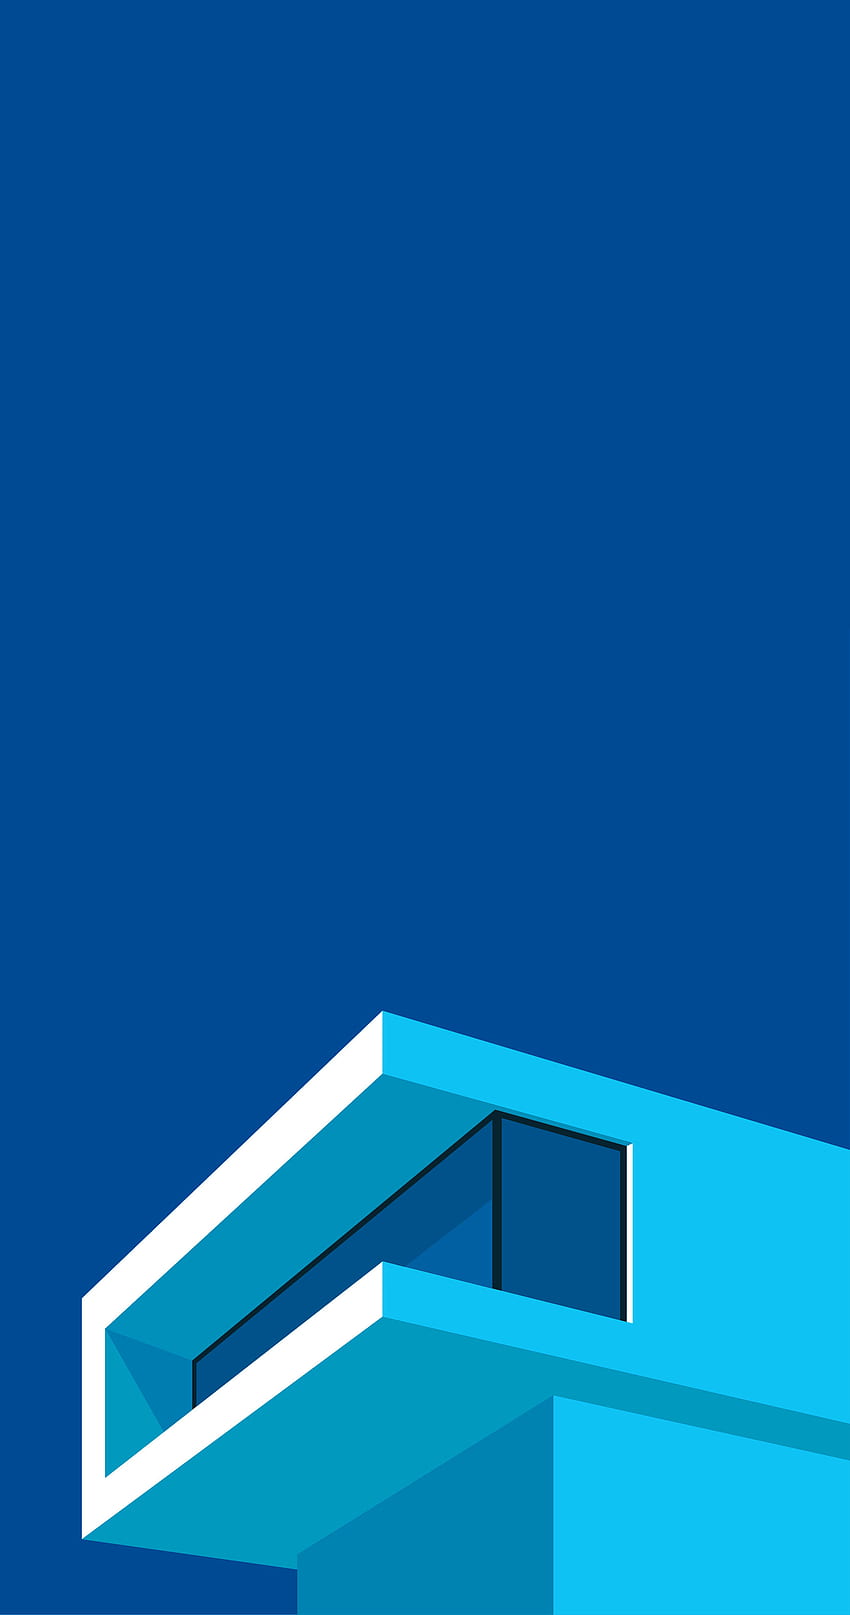 Edifício futurista, céu, vida, azul, preto, minimalista, casa, arquitetura Papel de parede de celular HD